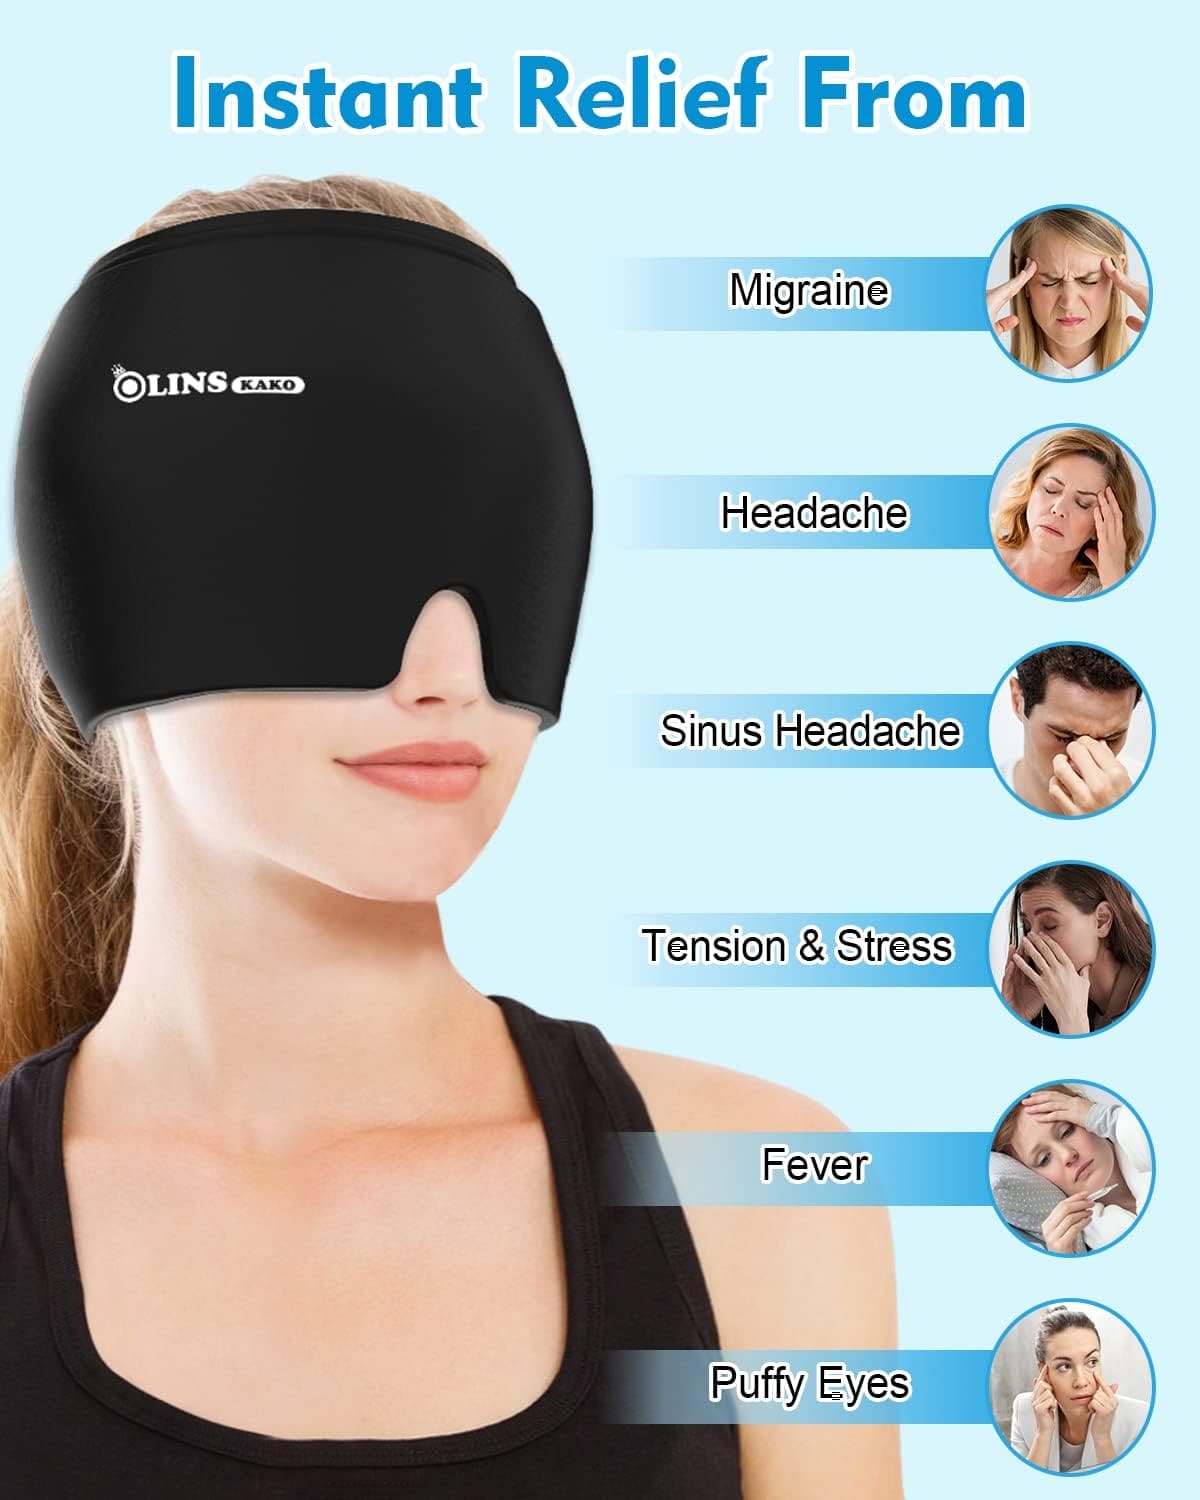 Migraine Relief Cap